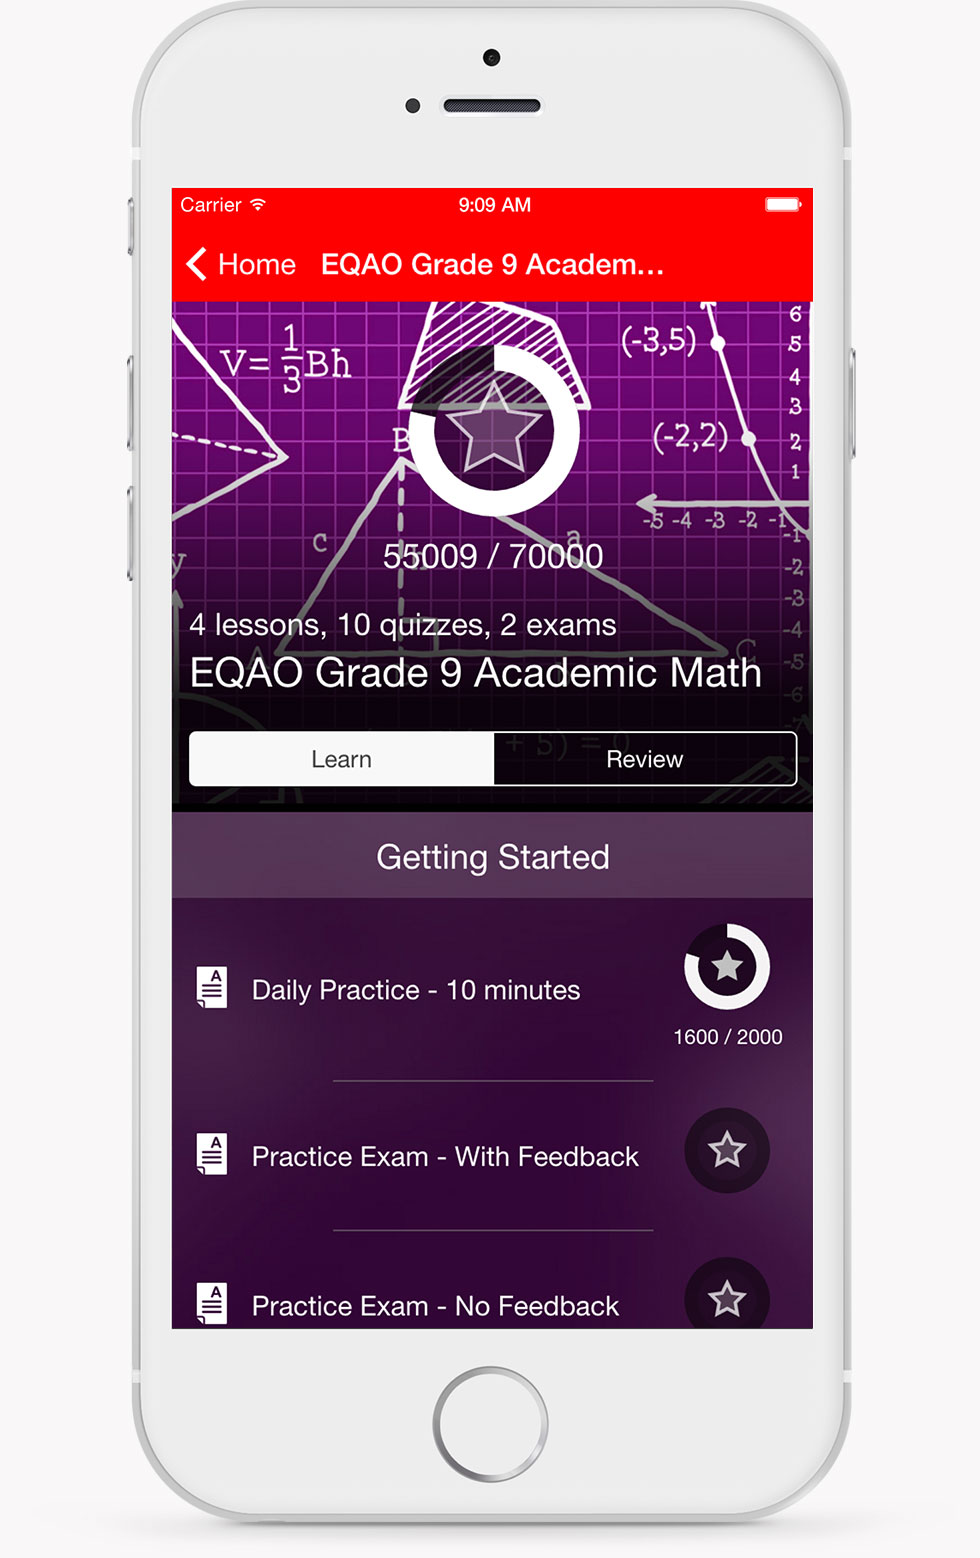 EQAO Academic Math Course List